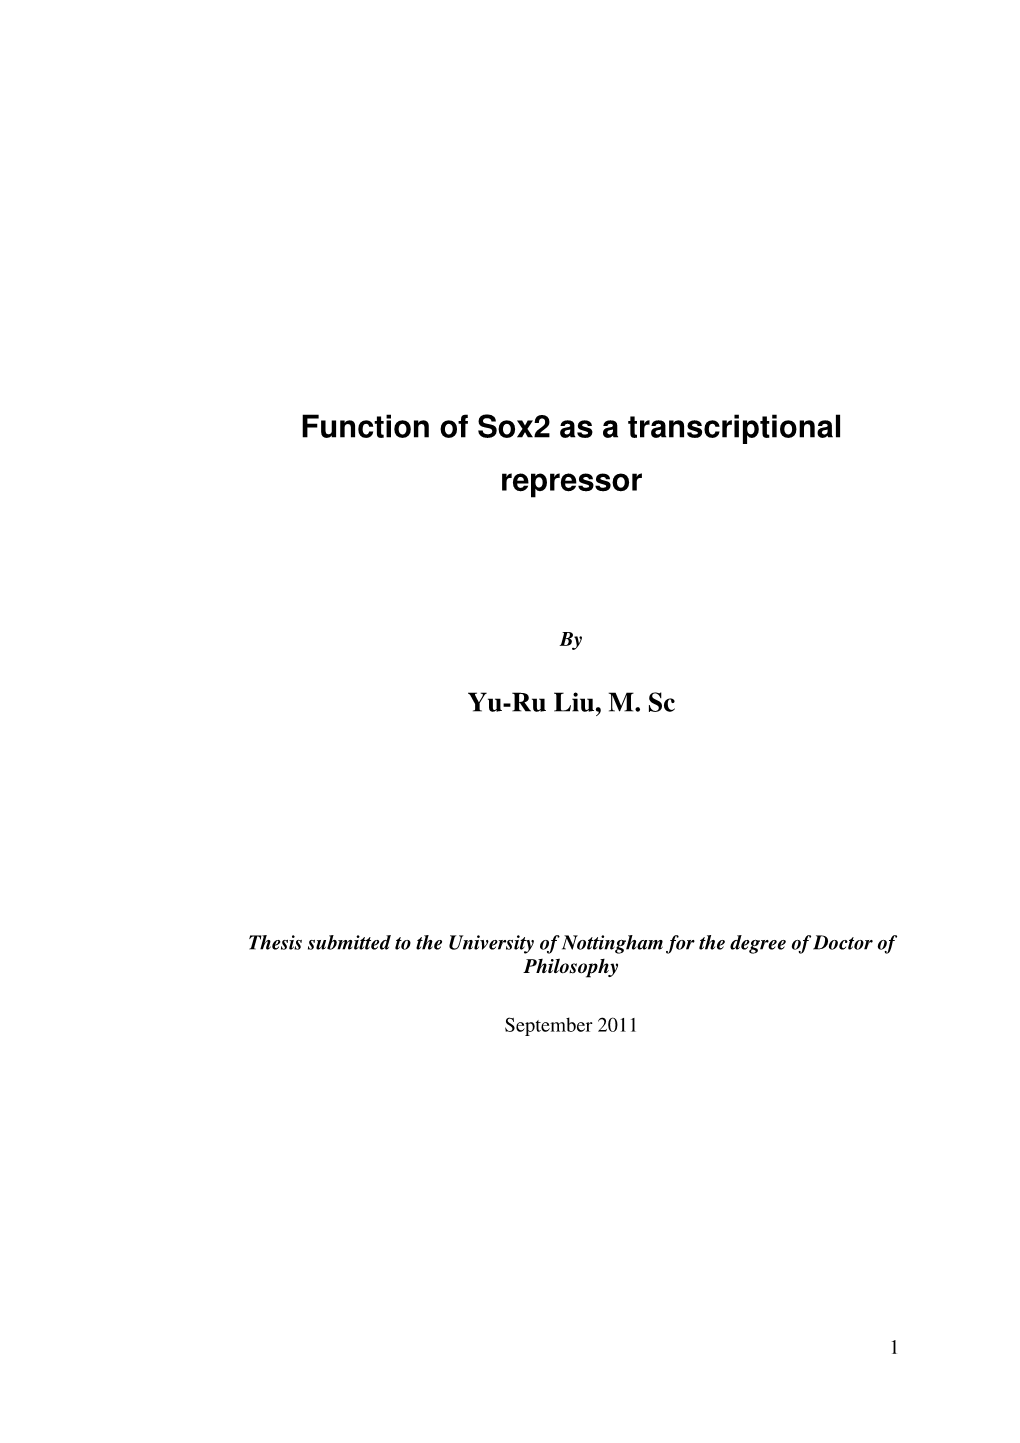 Function of Sox2 As a Transcriptional Repressor